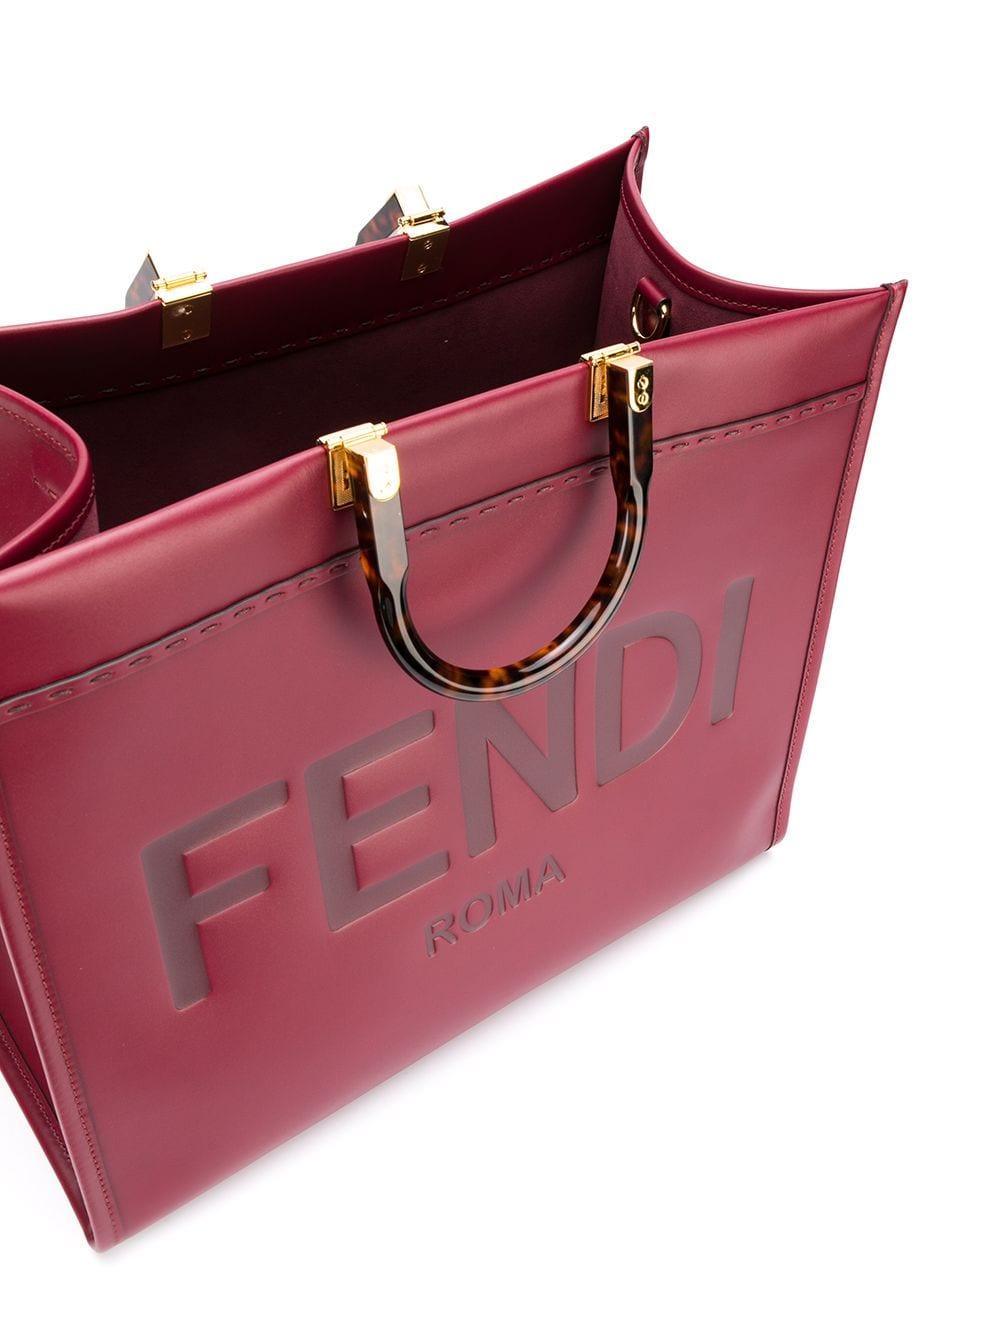 FENDI Sunshine Leather Tote Bag in Burgundy